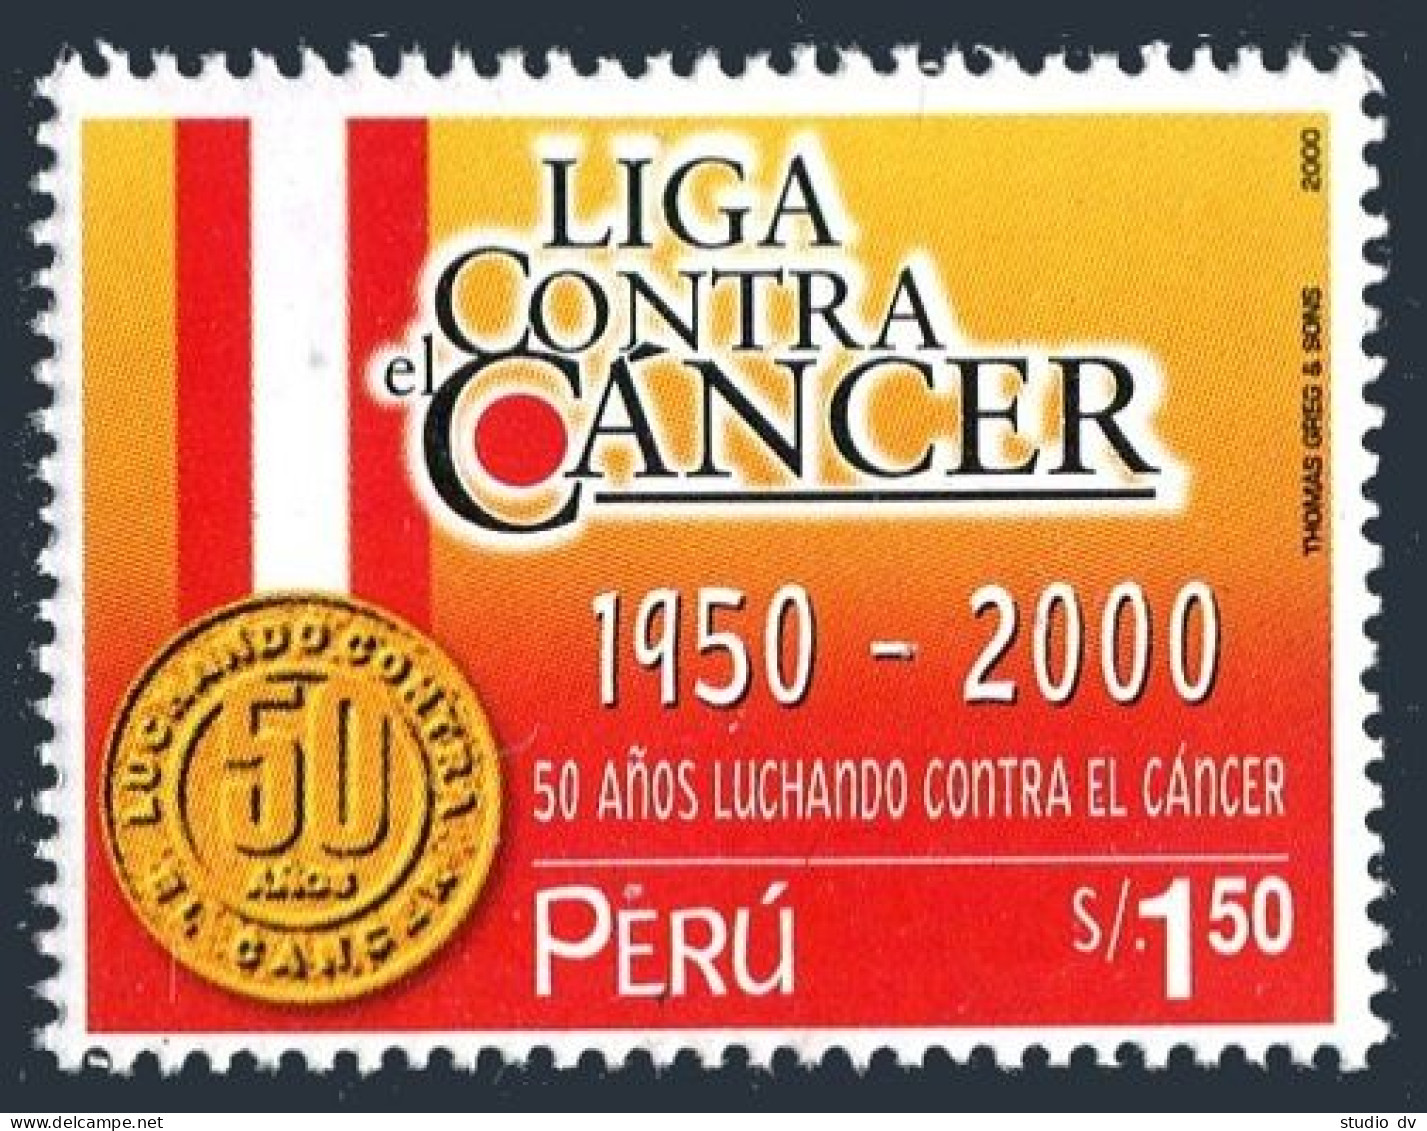 Peru 1281, MNH. Peruvian Cancer League, 50th Ann. 2000. - Pérou